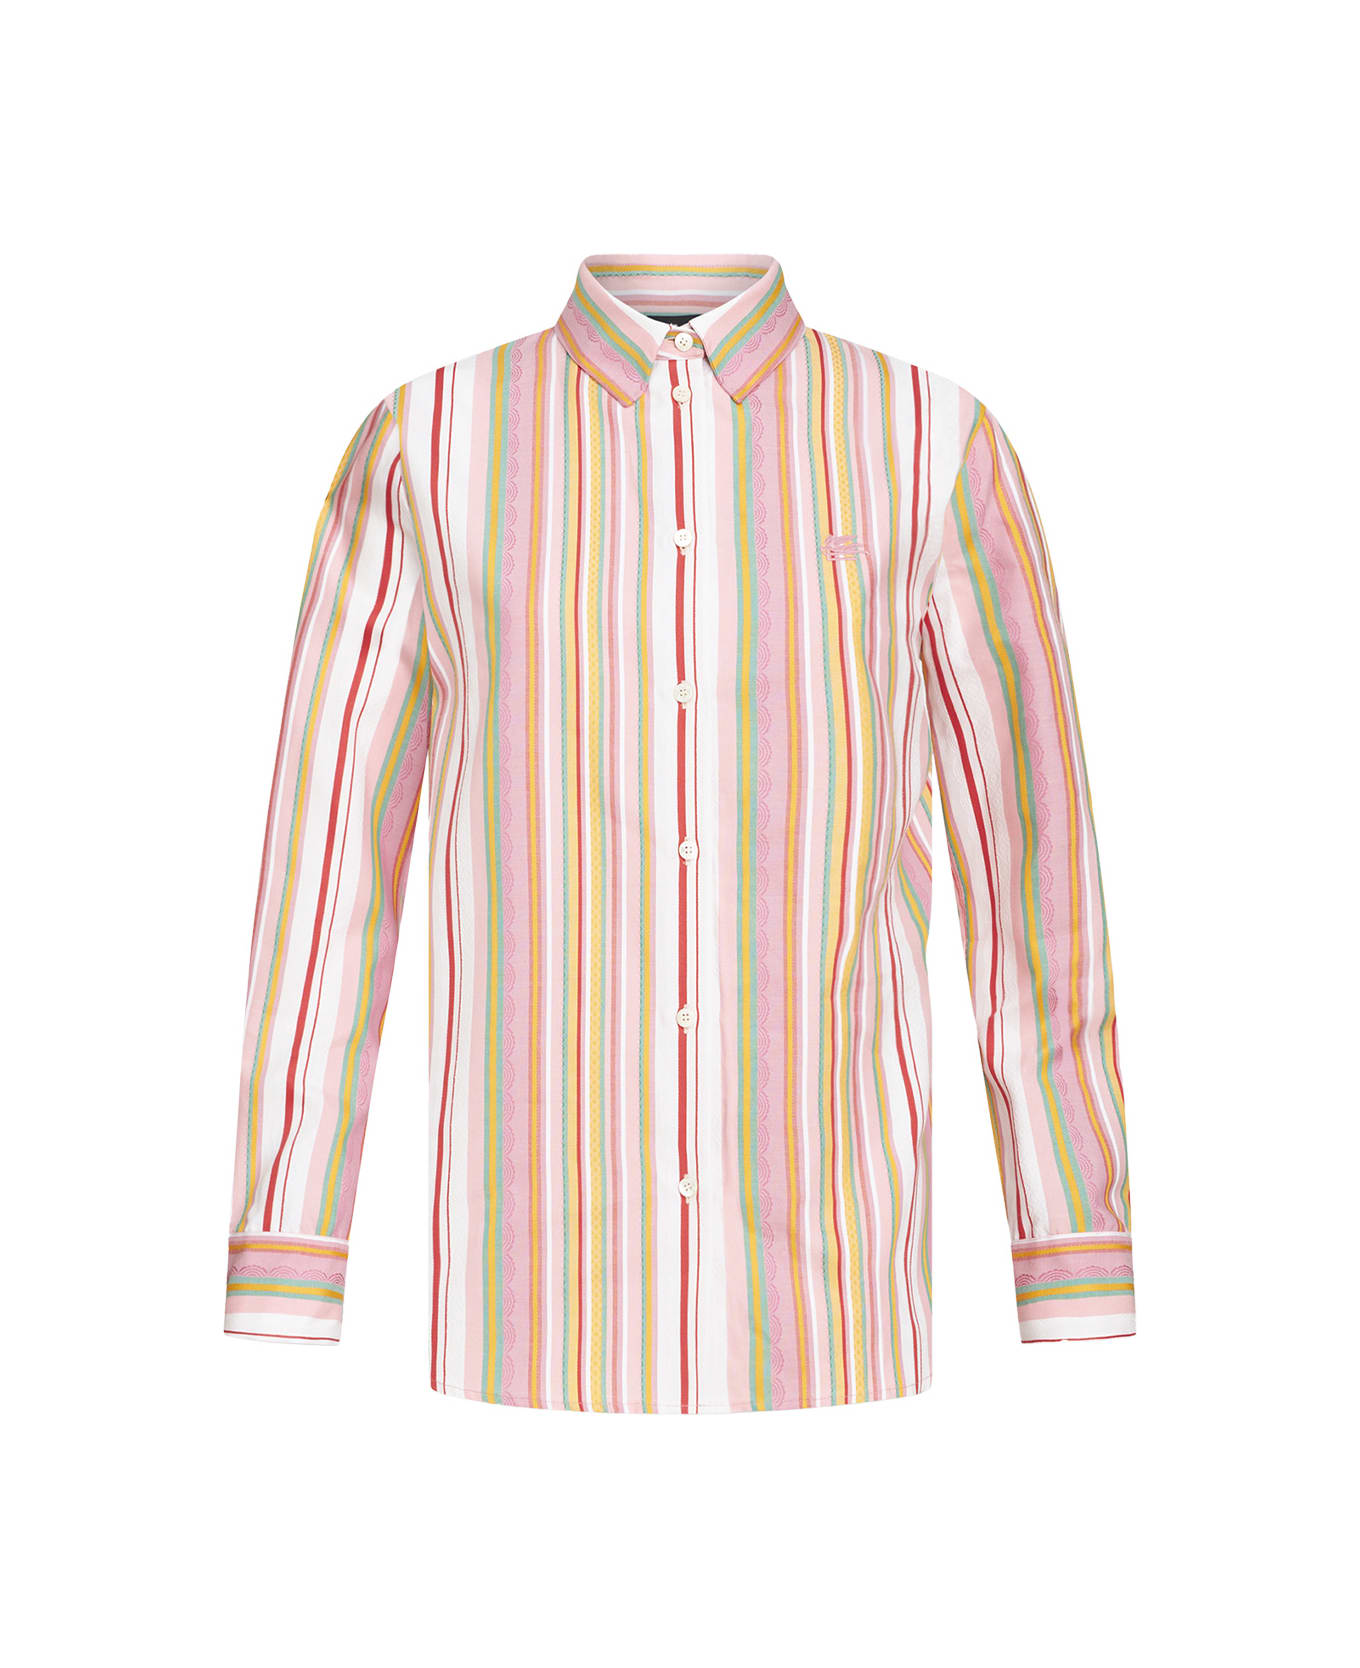 Etro Pink/multicolour Striped Cotton Shirt - Pink